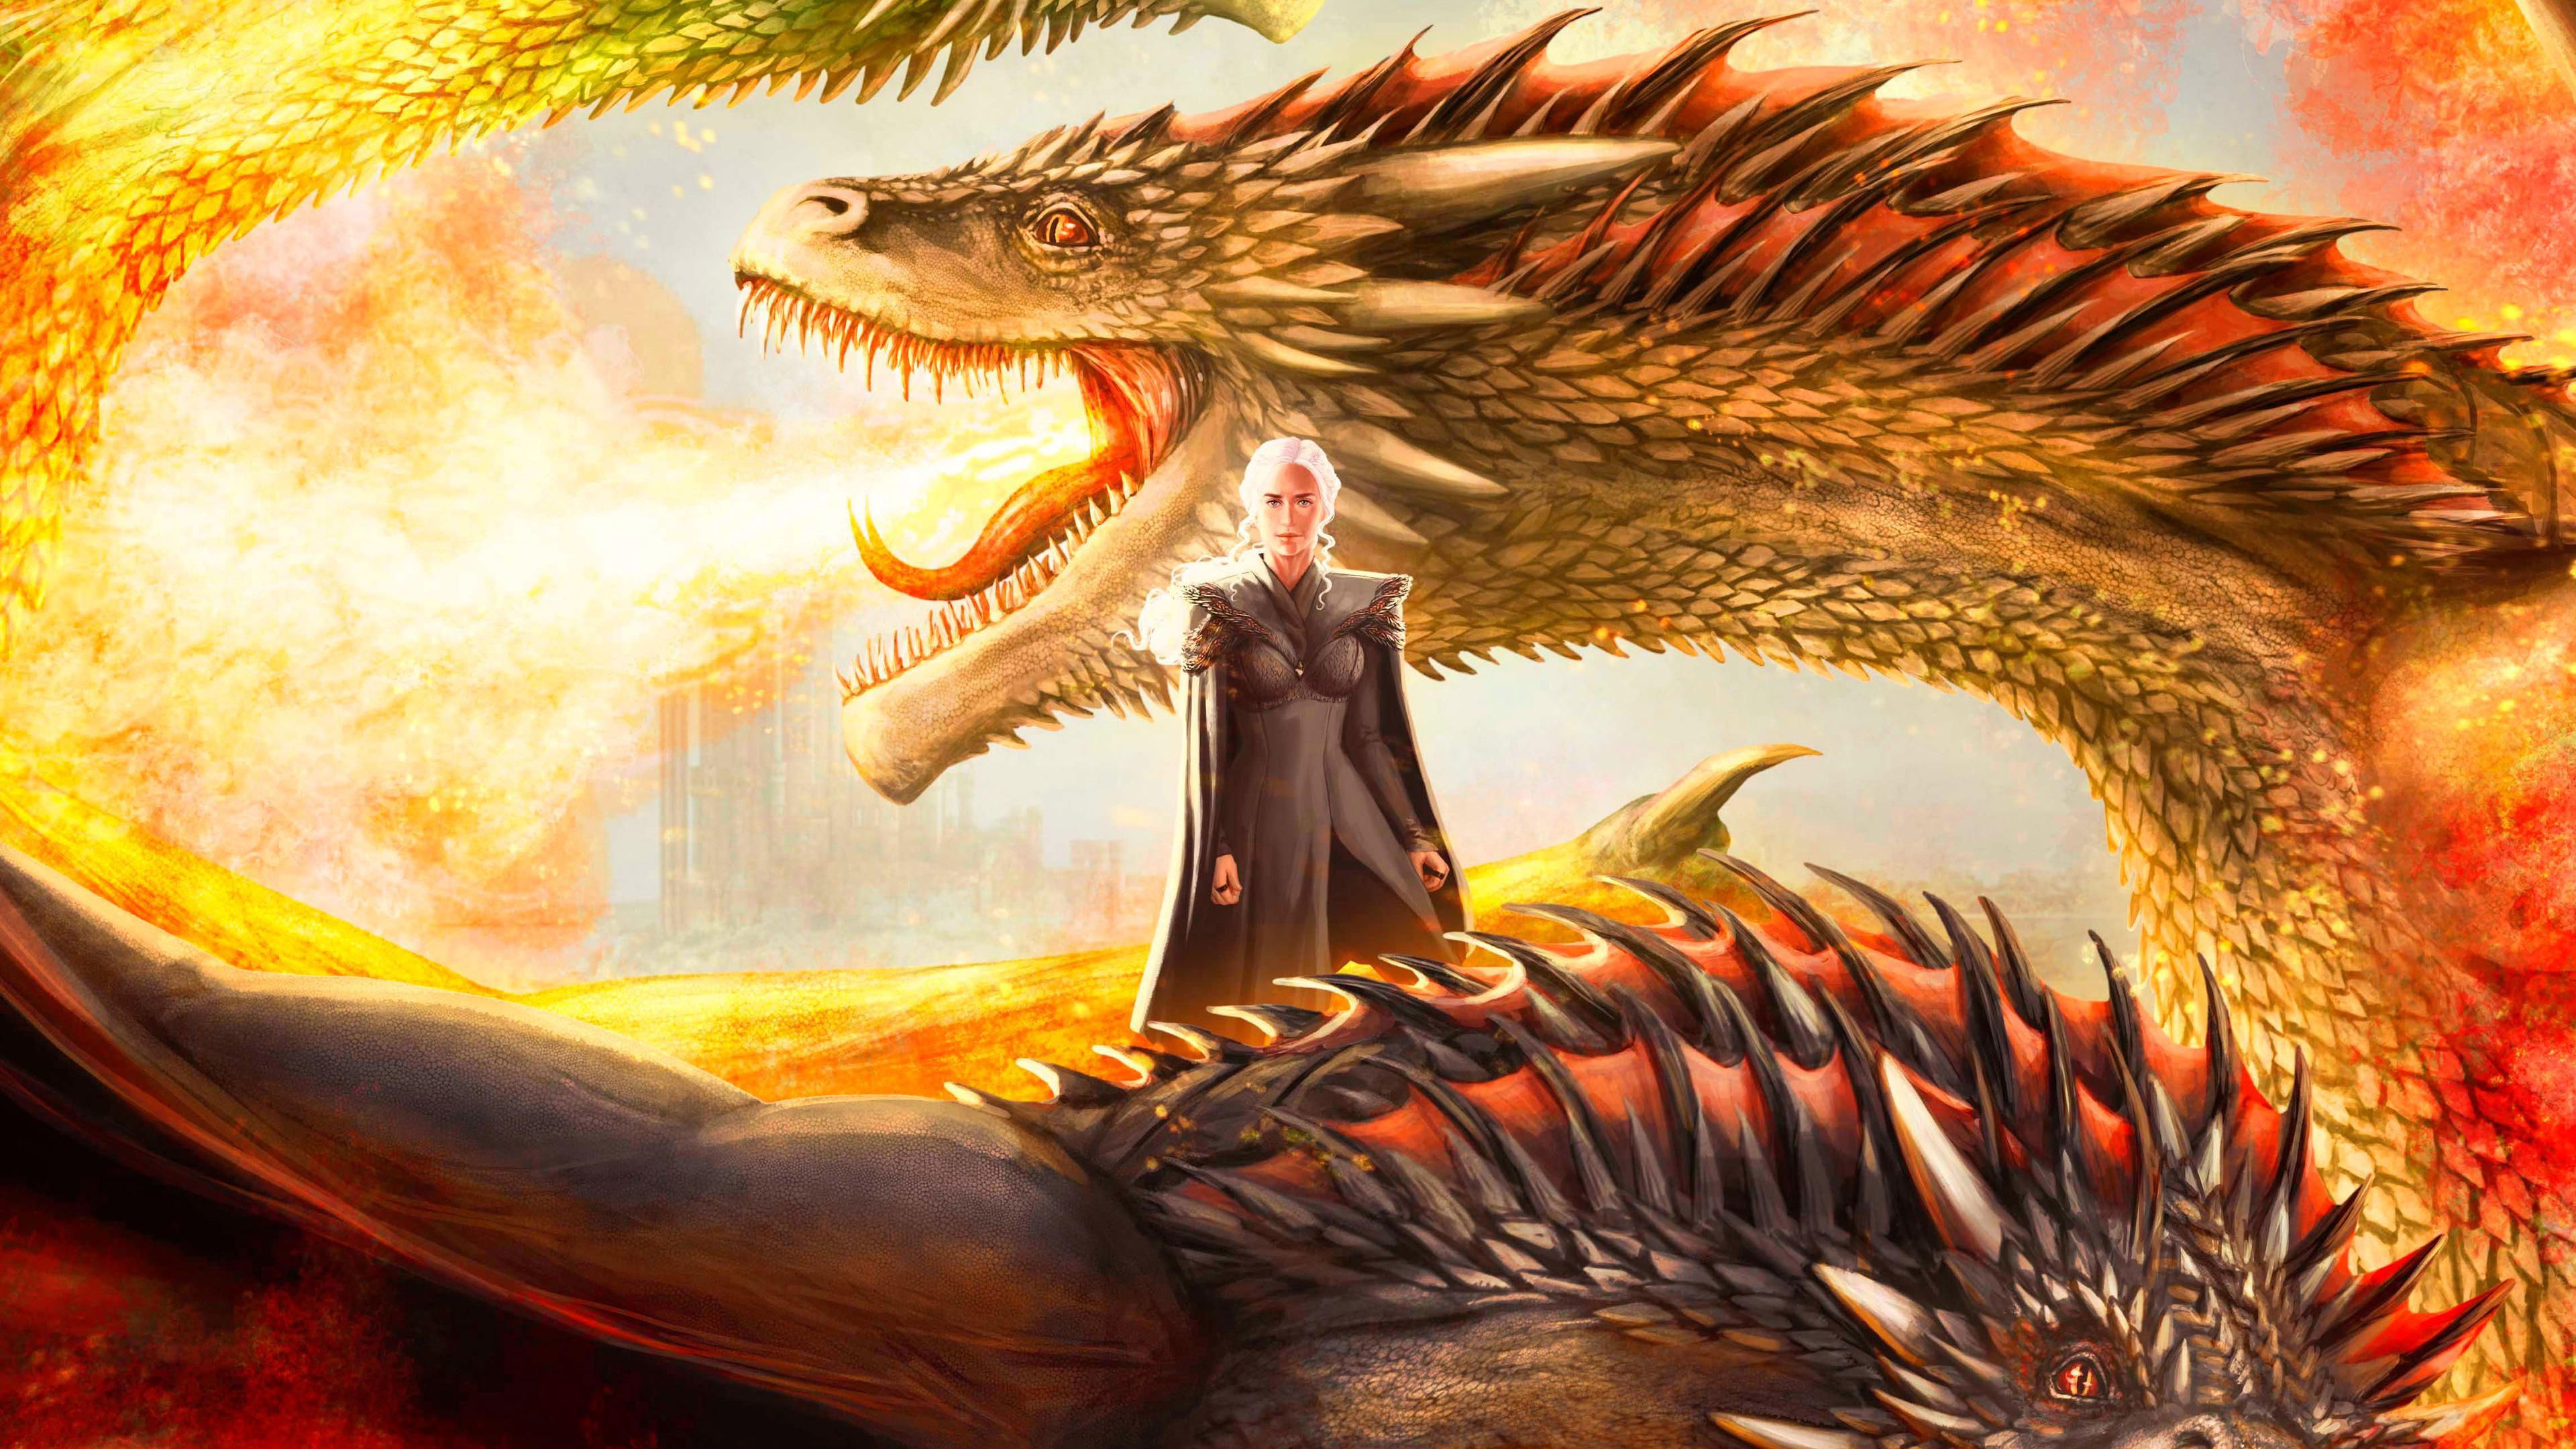 Mother Of Dragons Artwork, HD Tv Shows, 4k Wallpaper, Image